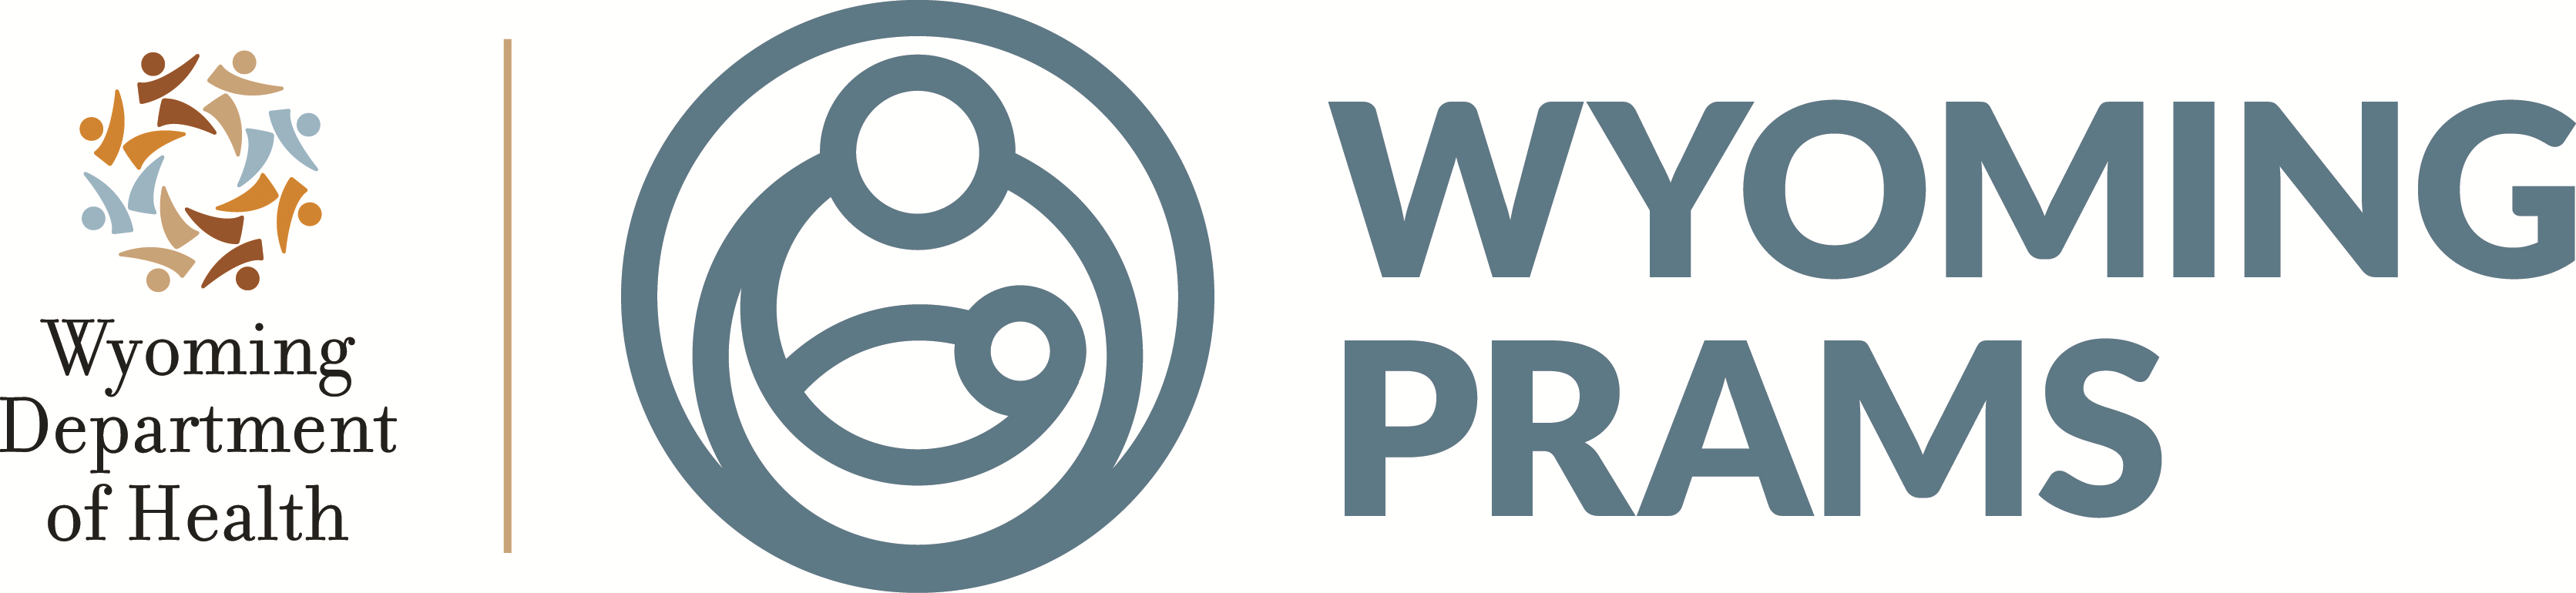 PRAMS logo